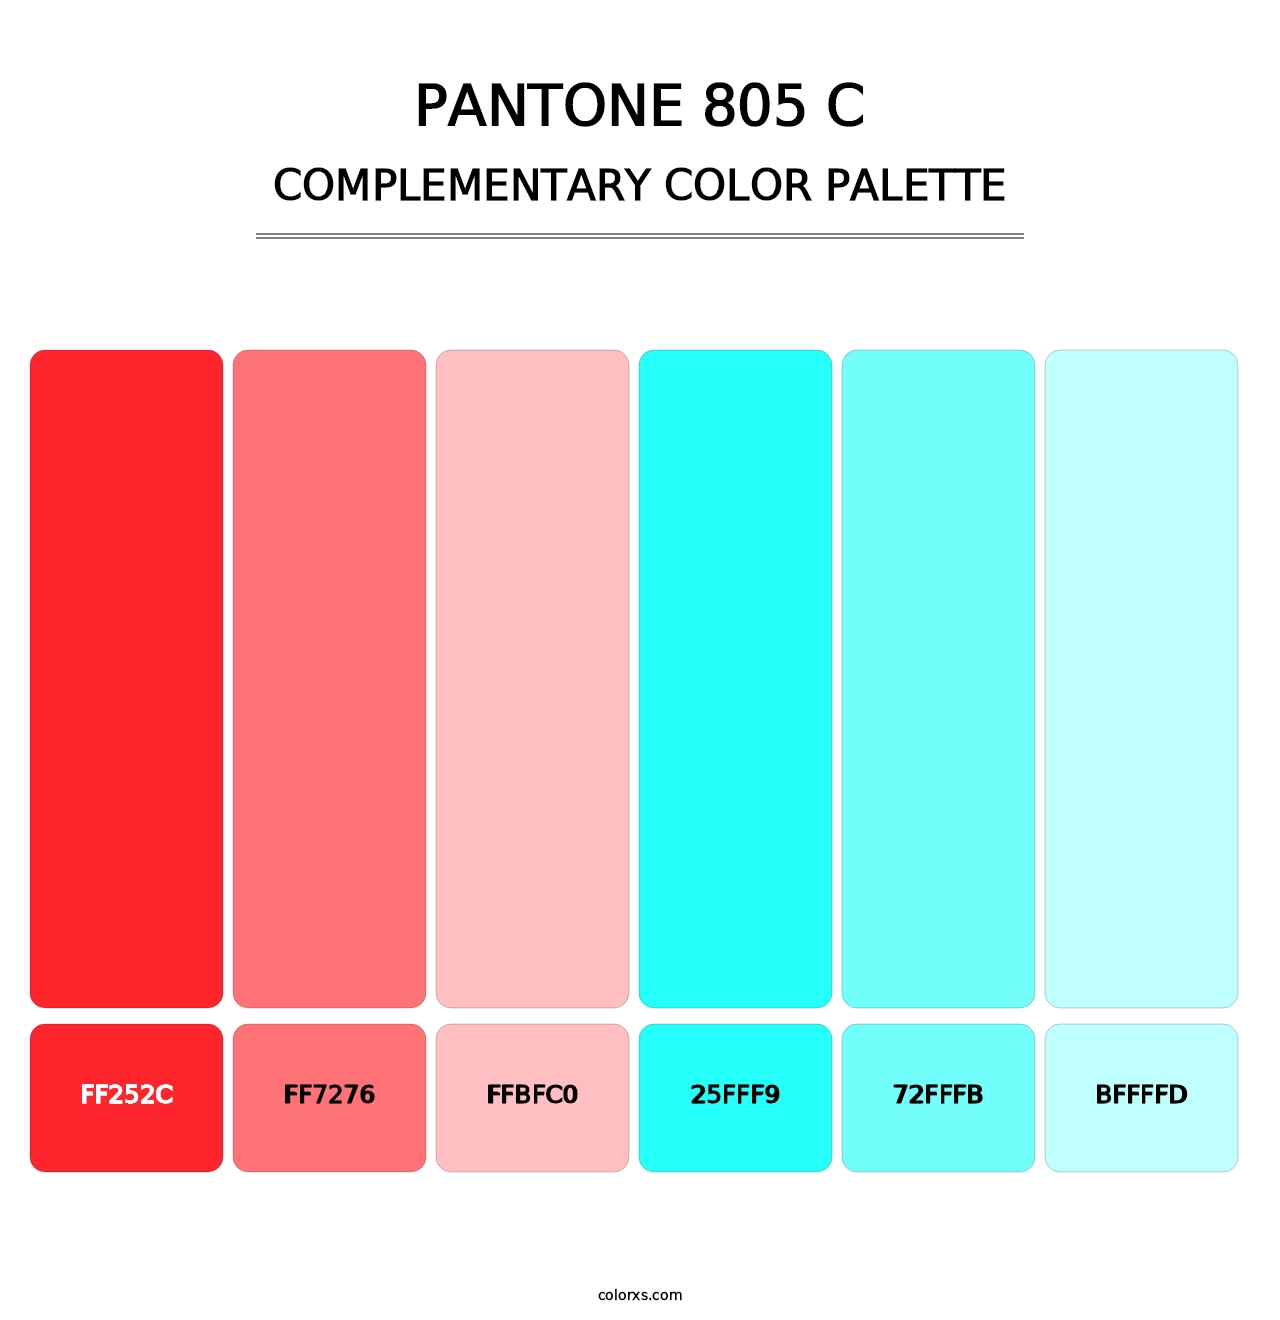 PANTONE 805 C - Complementary Color Palette